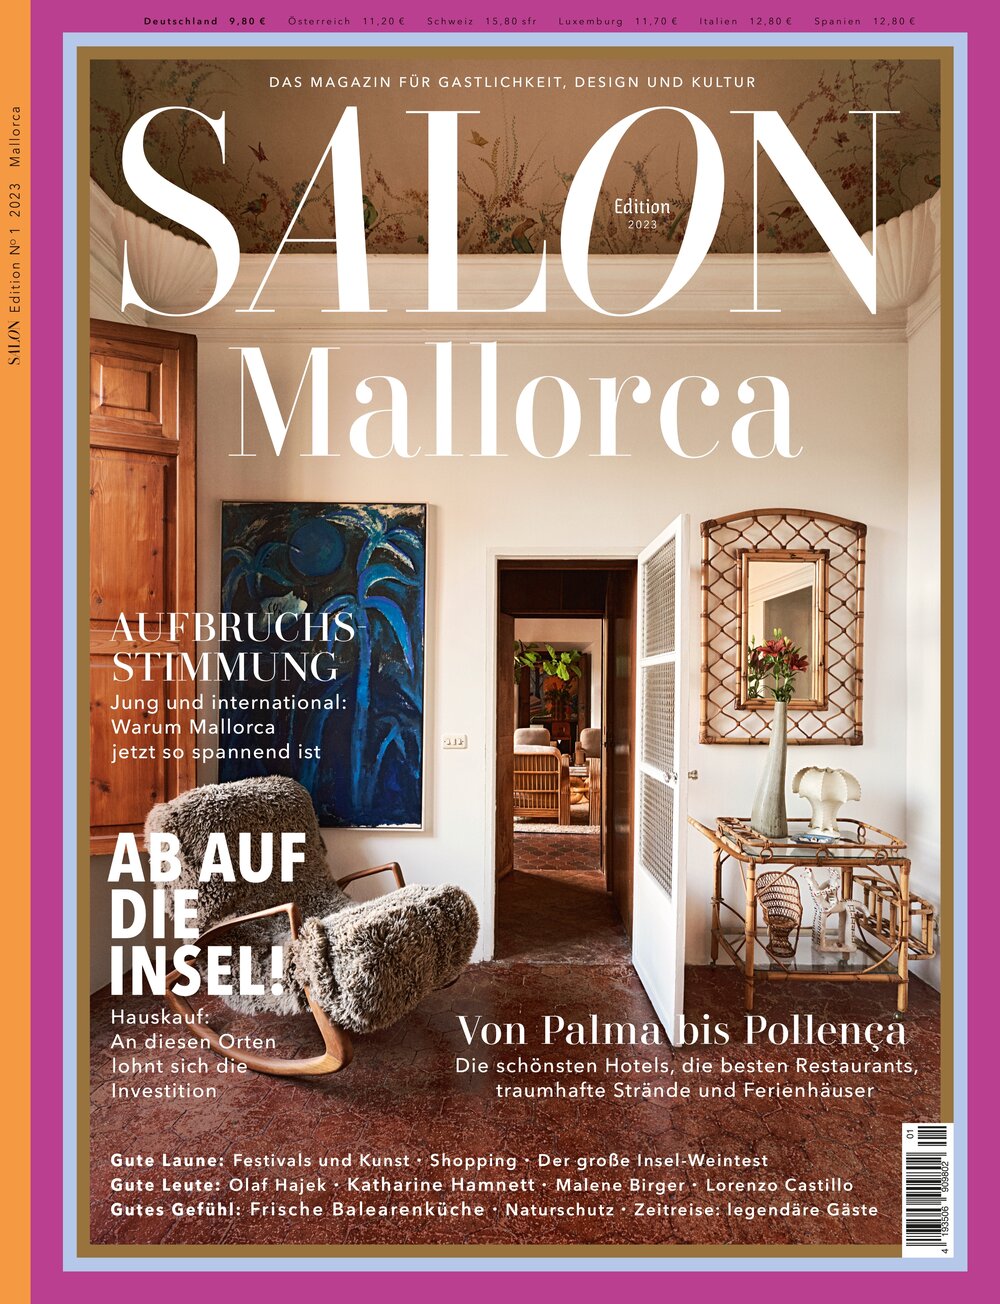 Sonderausgabe SALON Edition "Mallorca"